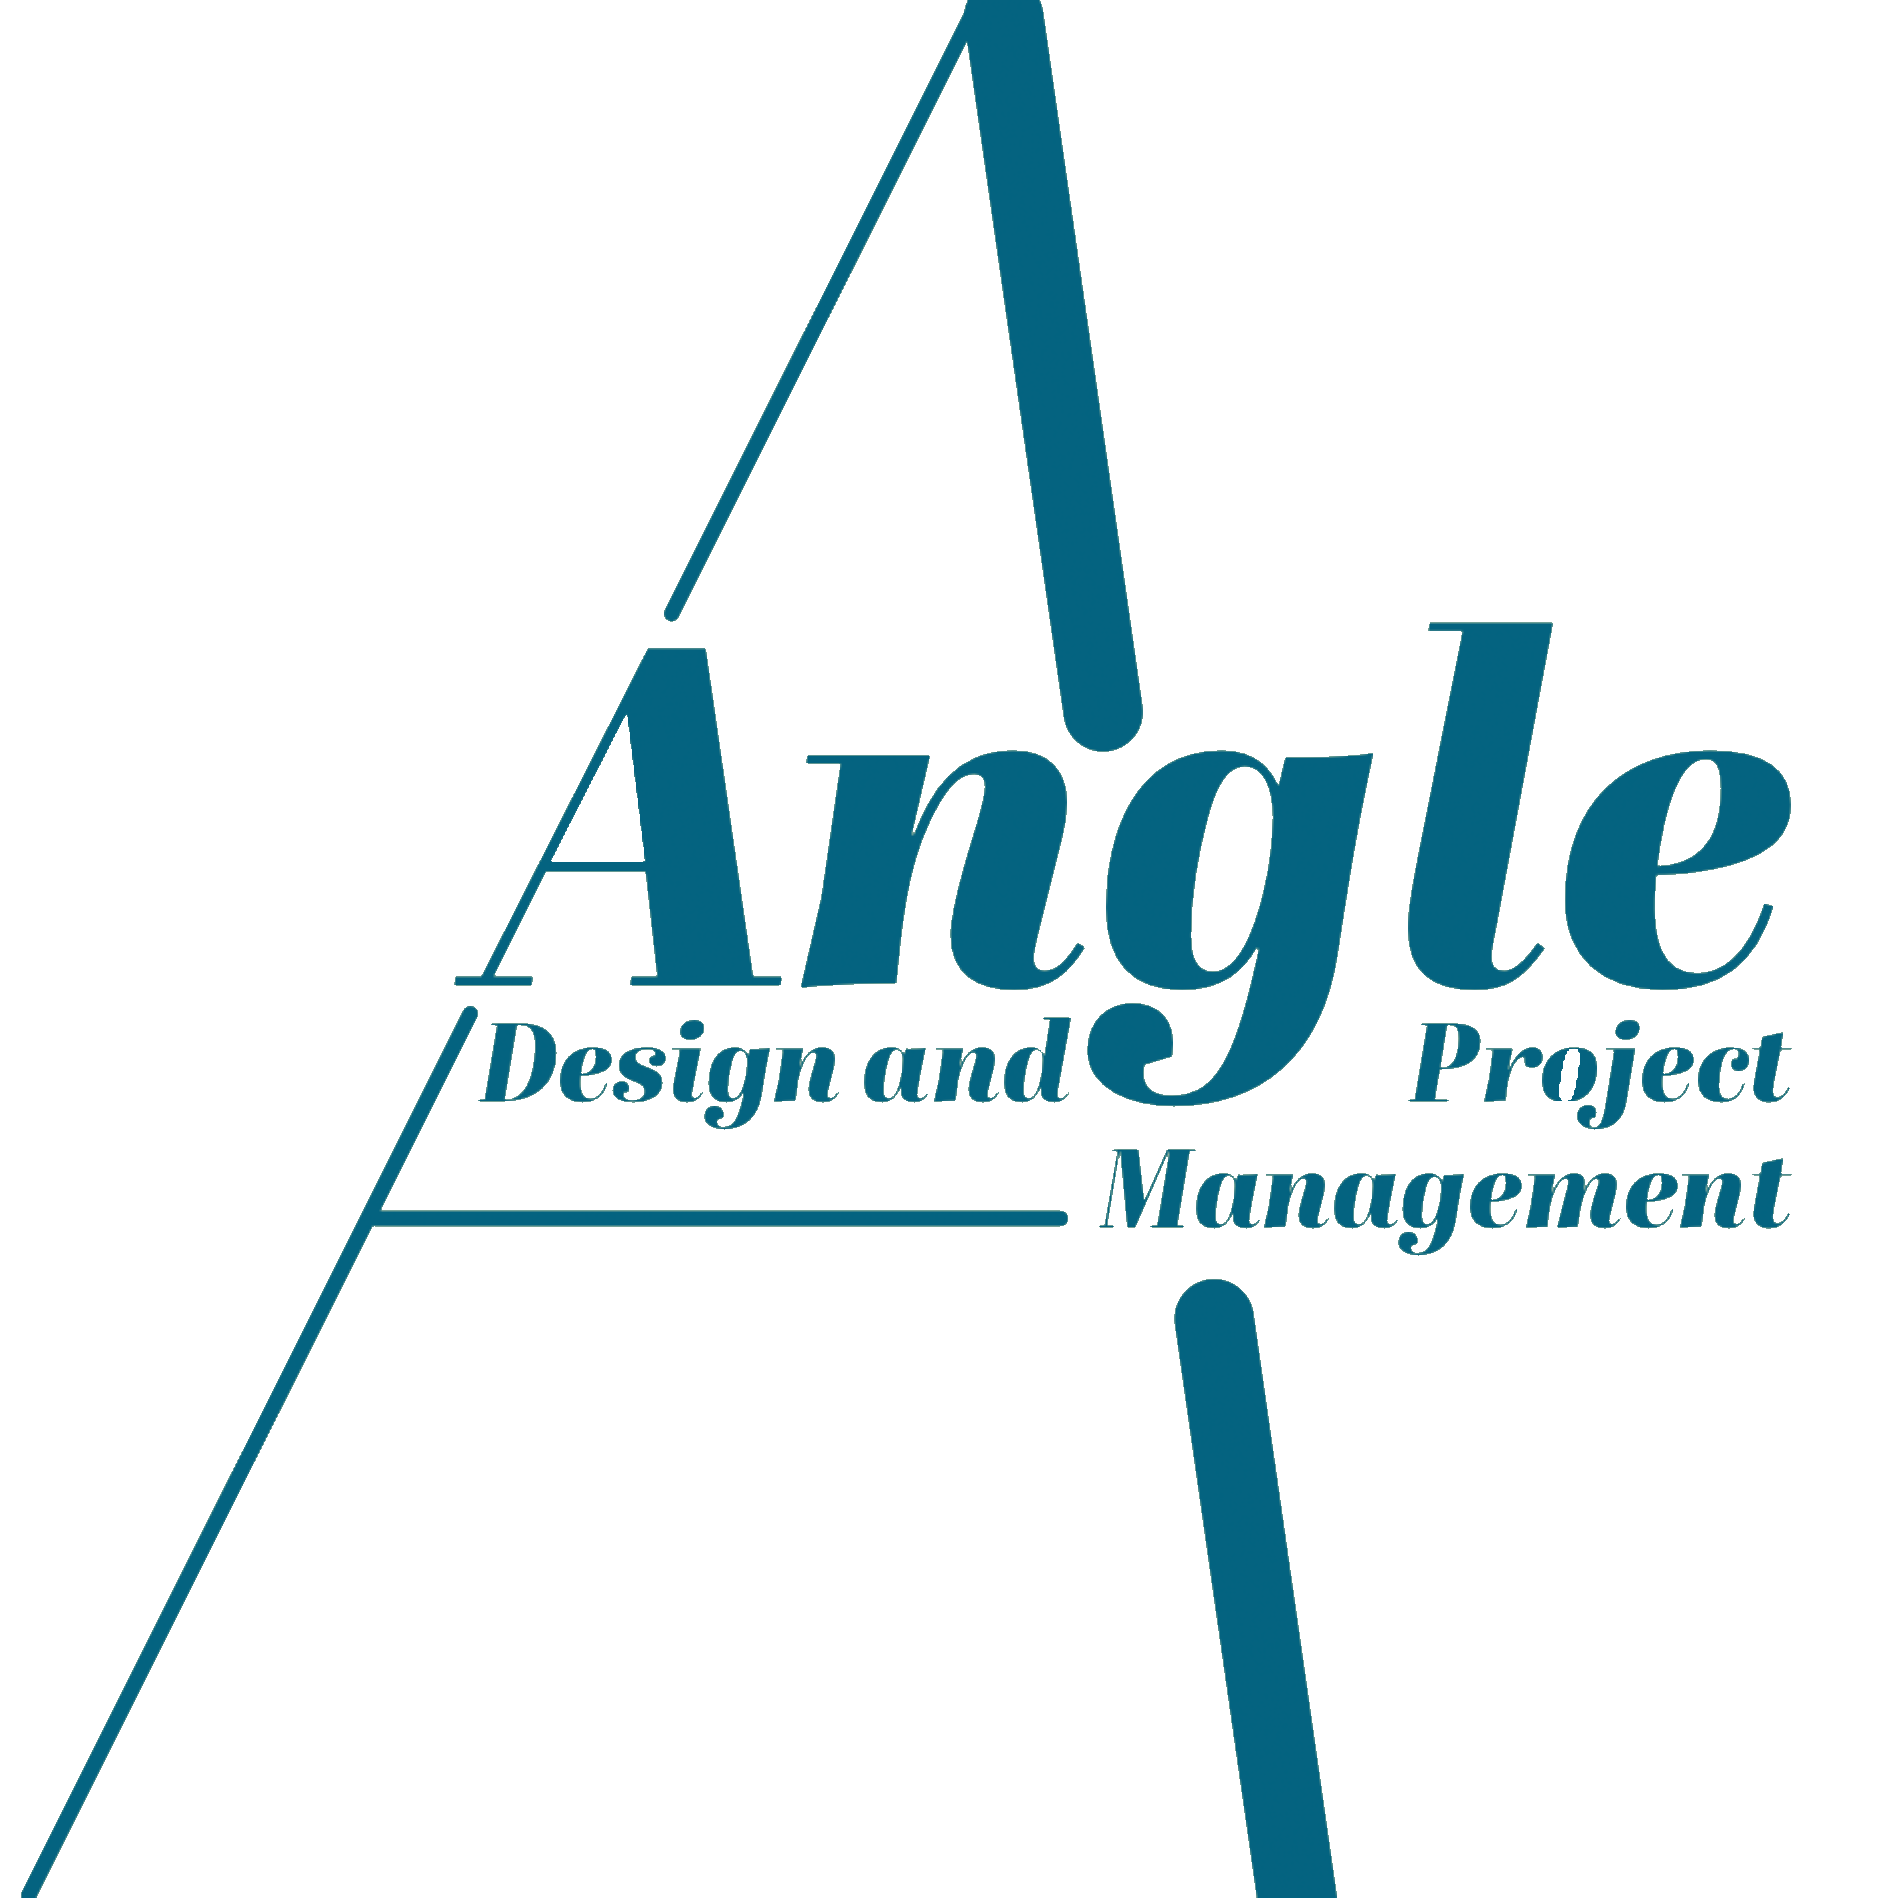 Angle Design and Project Management Web logo larger_Transparent